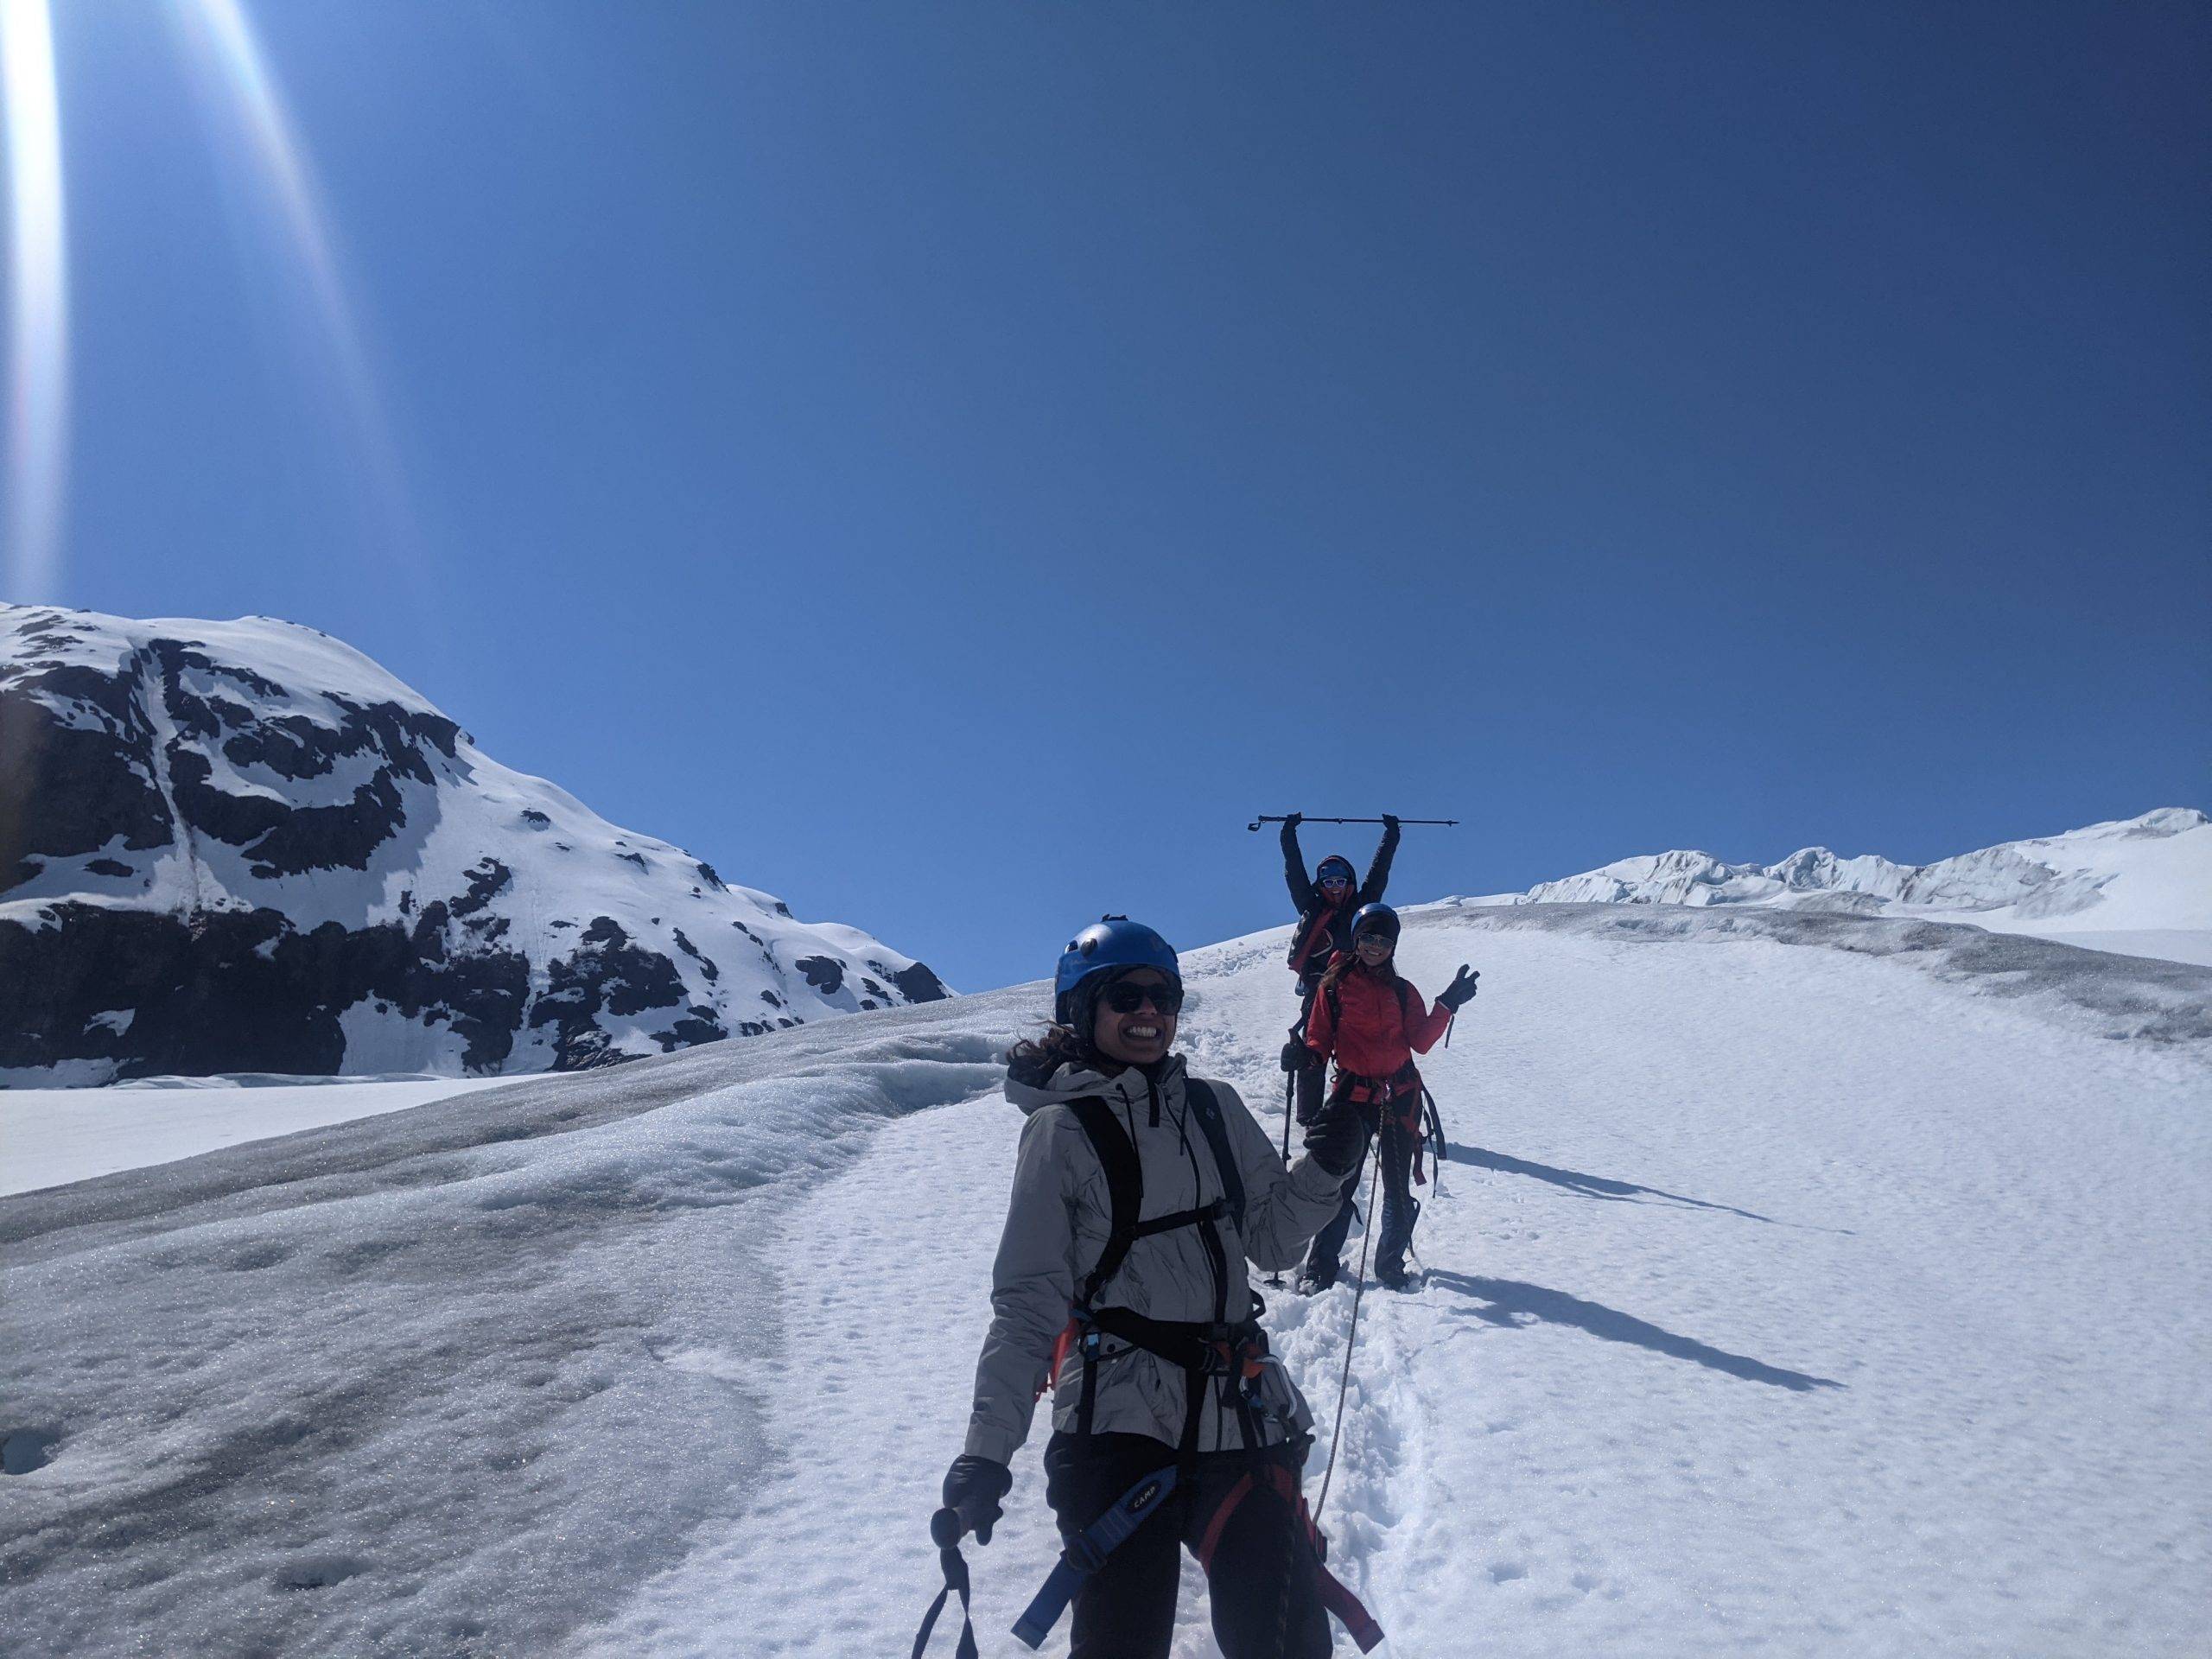 TRIP REPORT: 5/27/22 Exit Glacier Ice Hiking Adventure